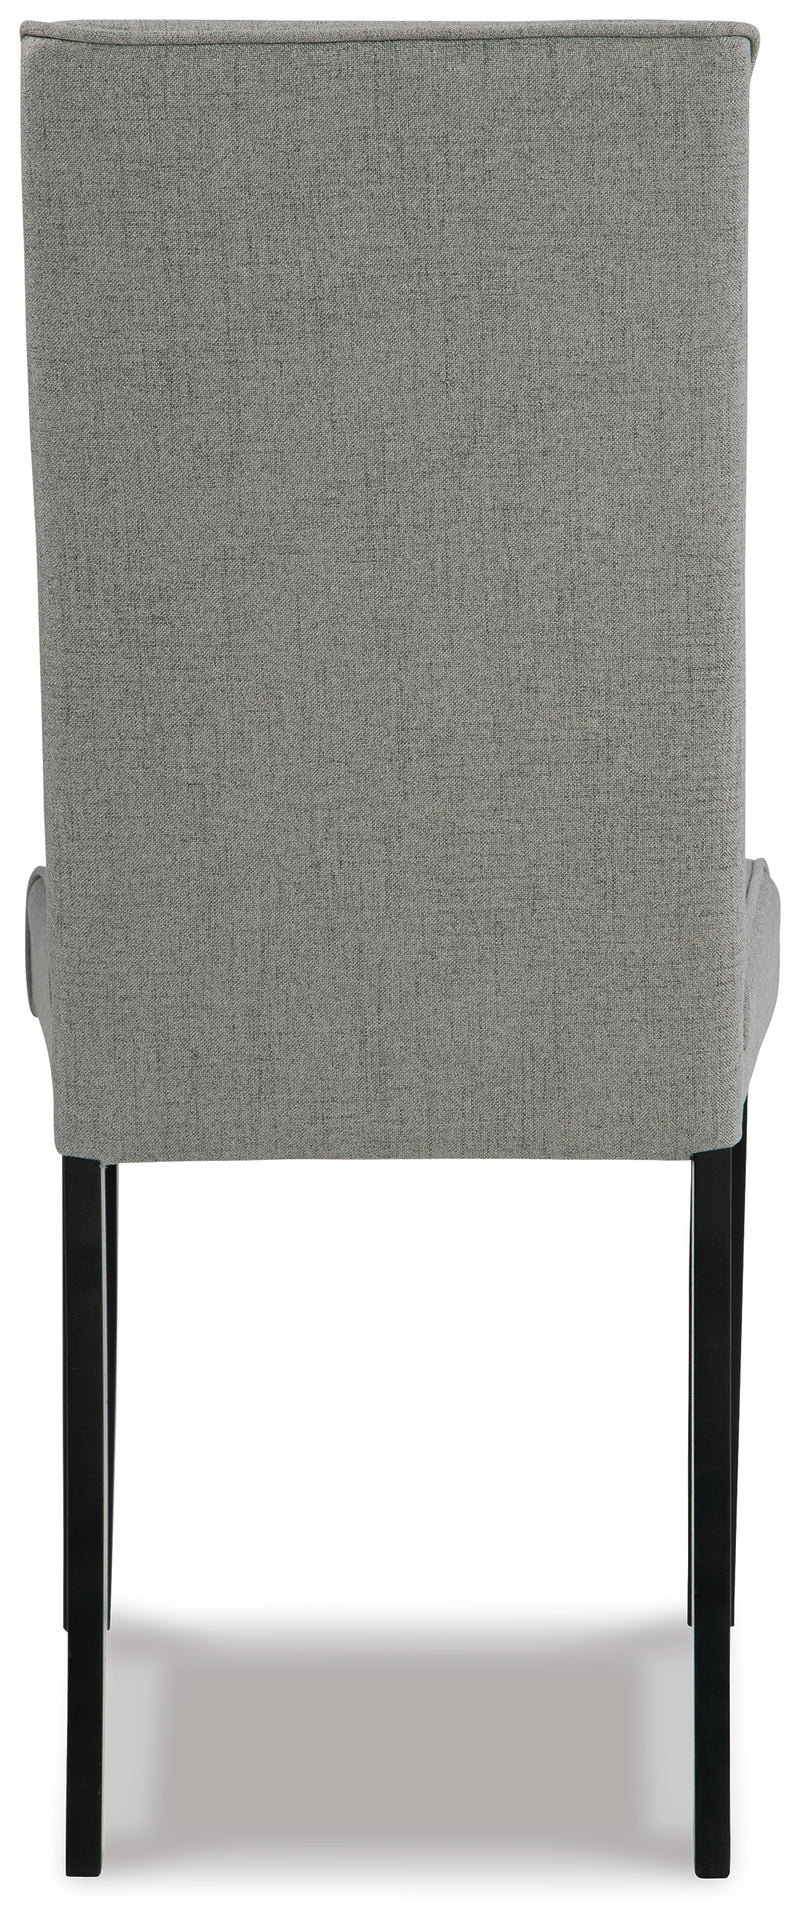 Kimonte Dark Brown/gray 2-Piece Dining Room Chair